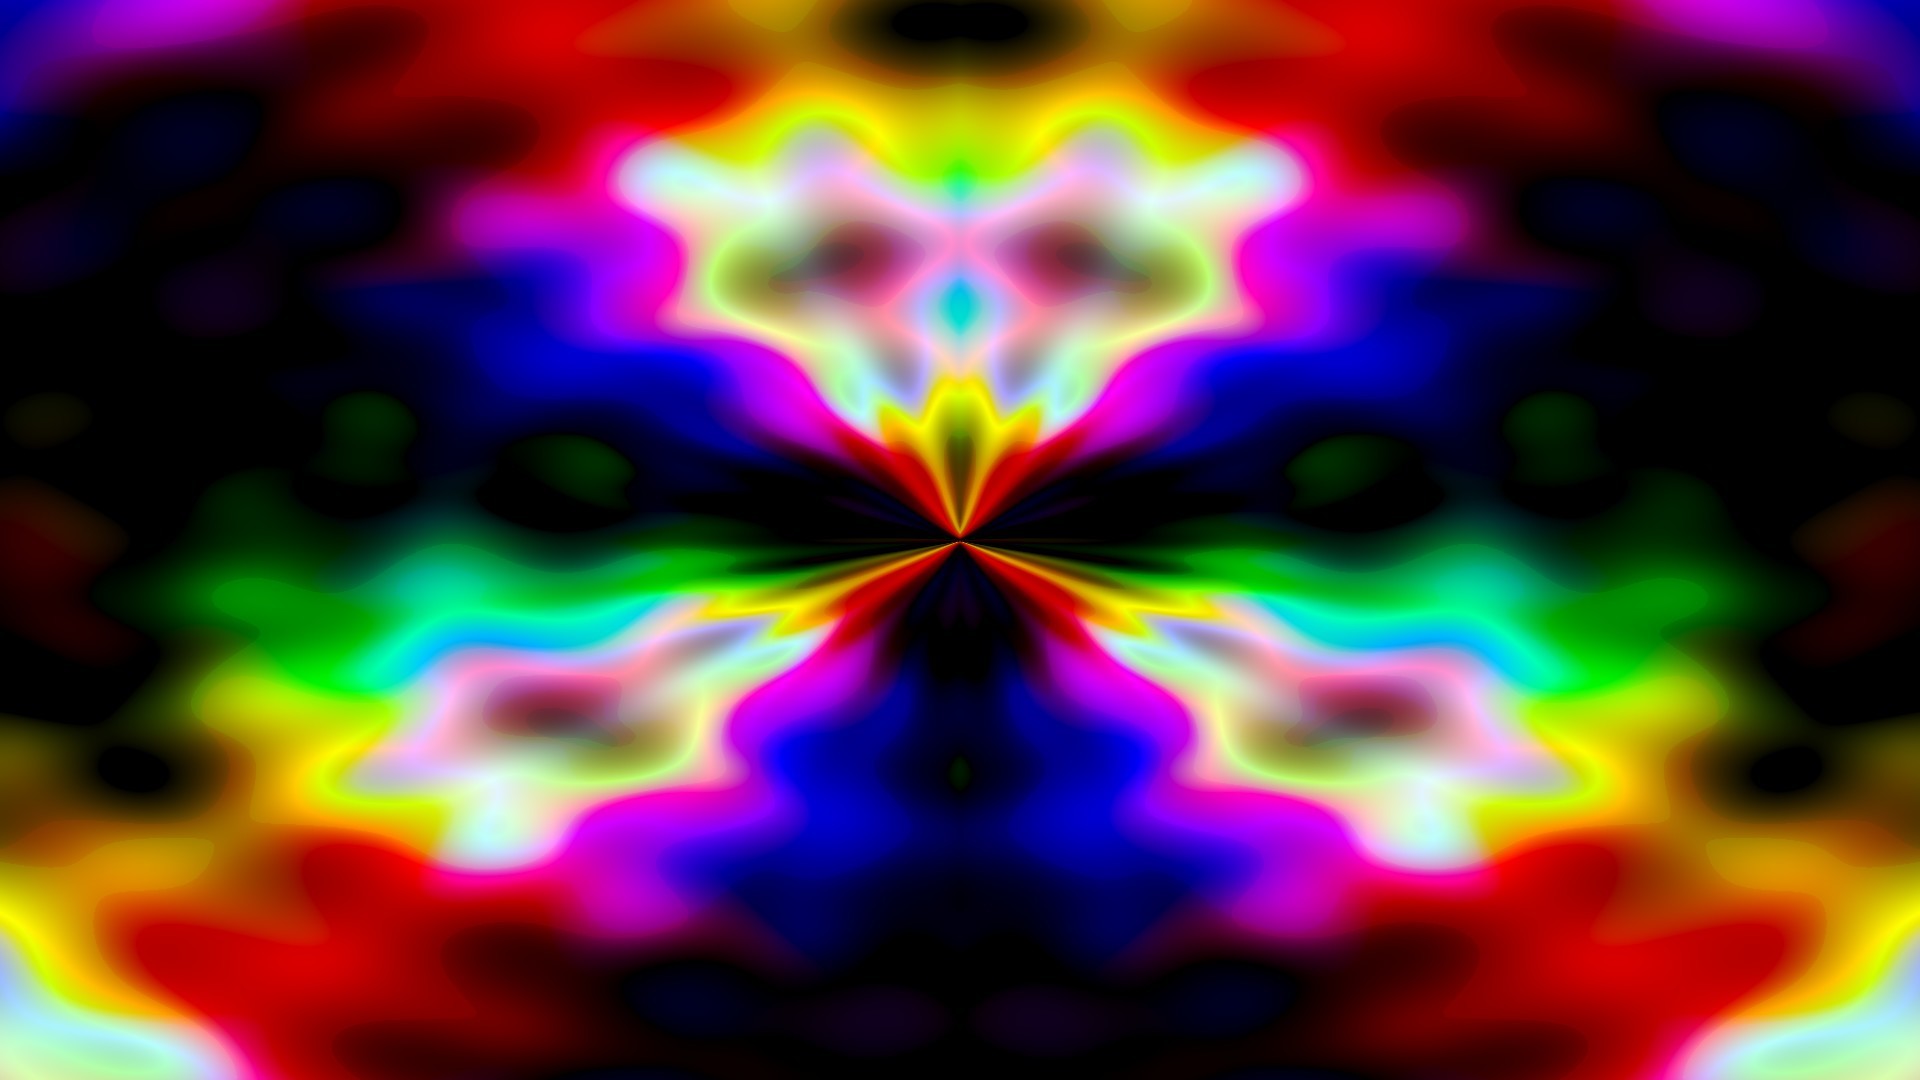 cool computer wallpapers,fractal art,psychedelic art,light,symmetry,pattern